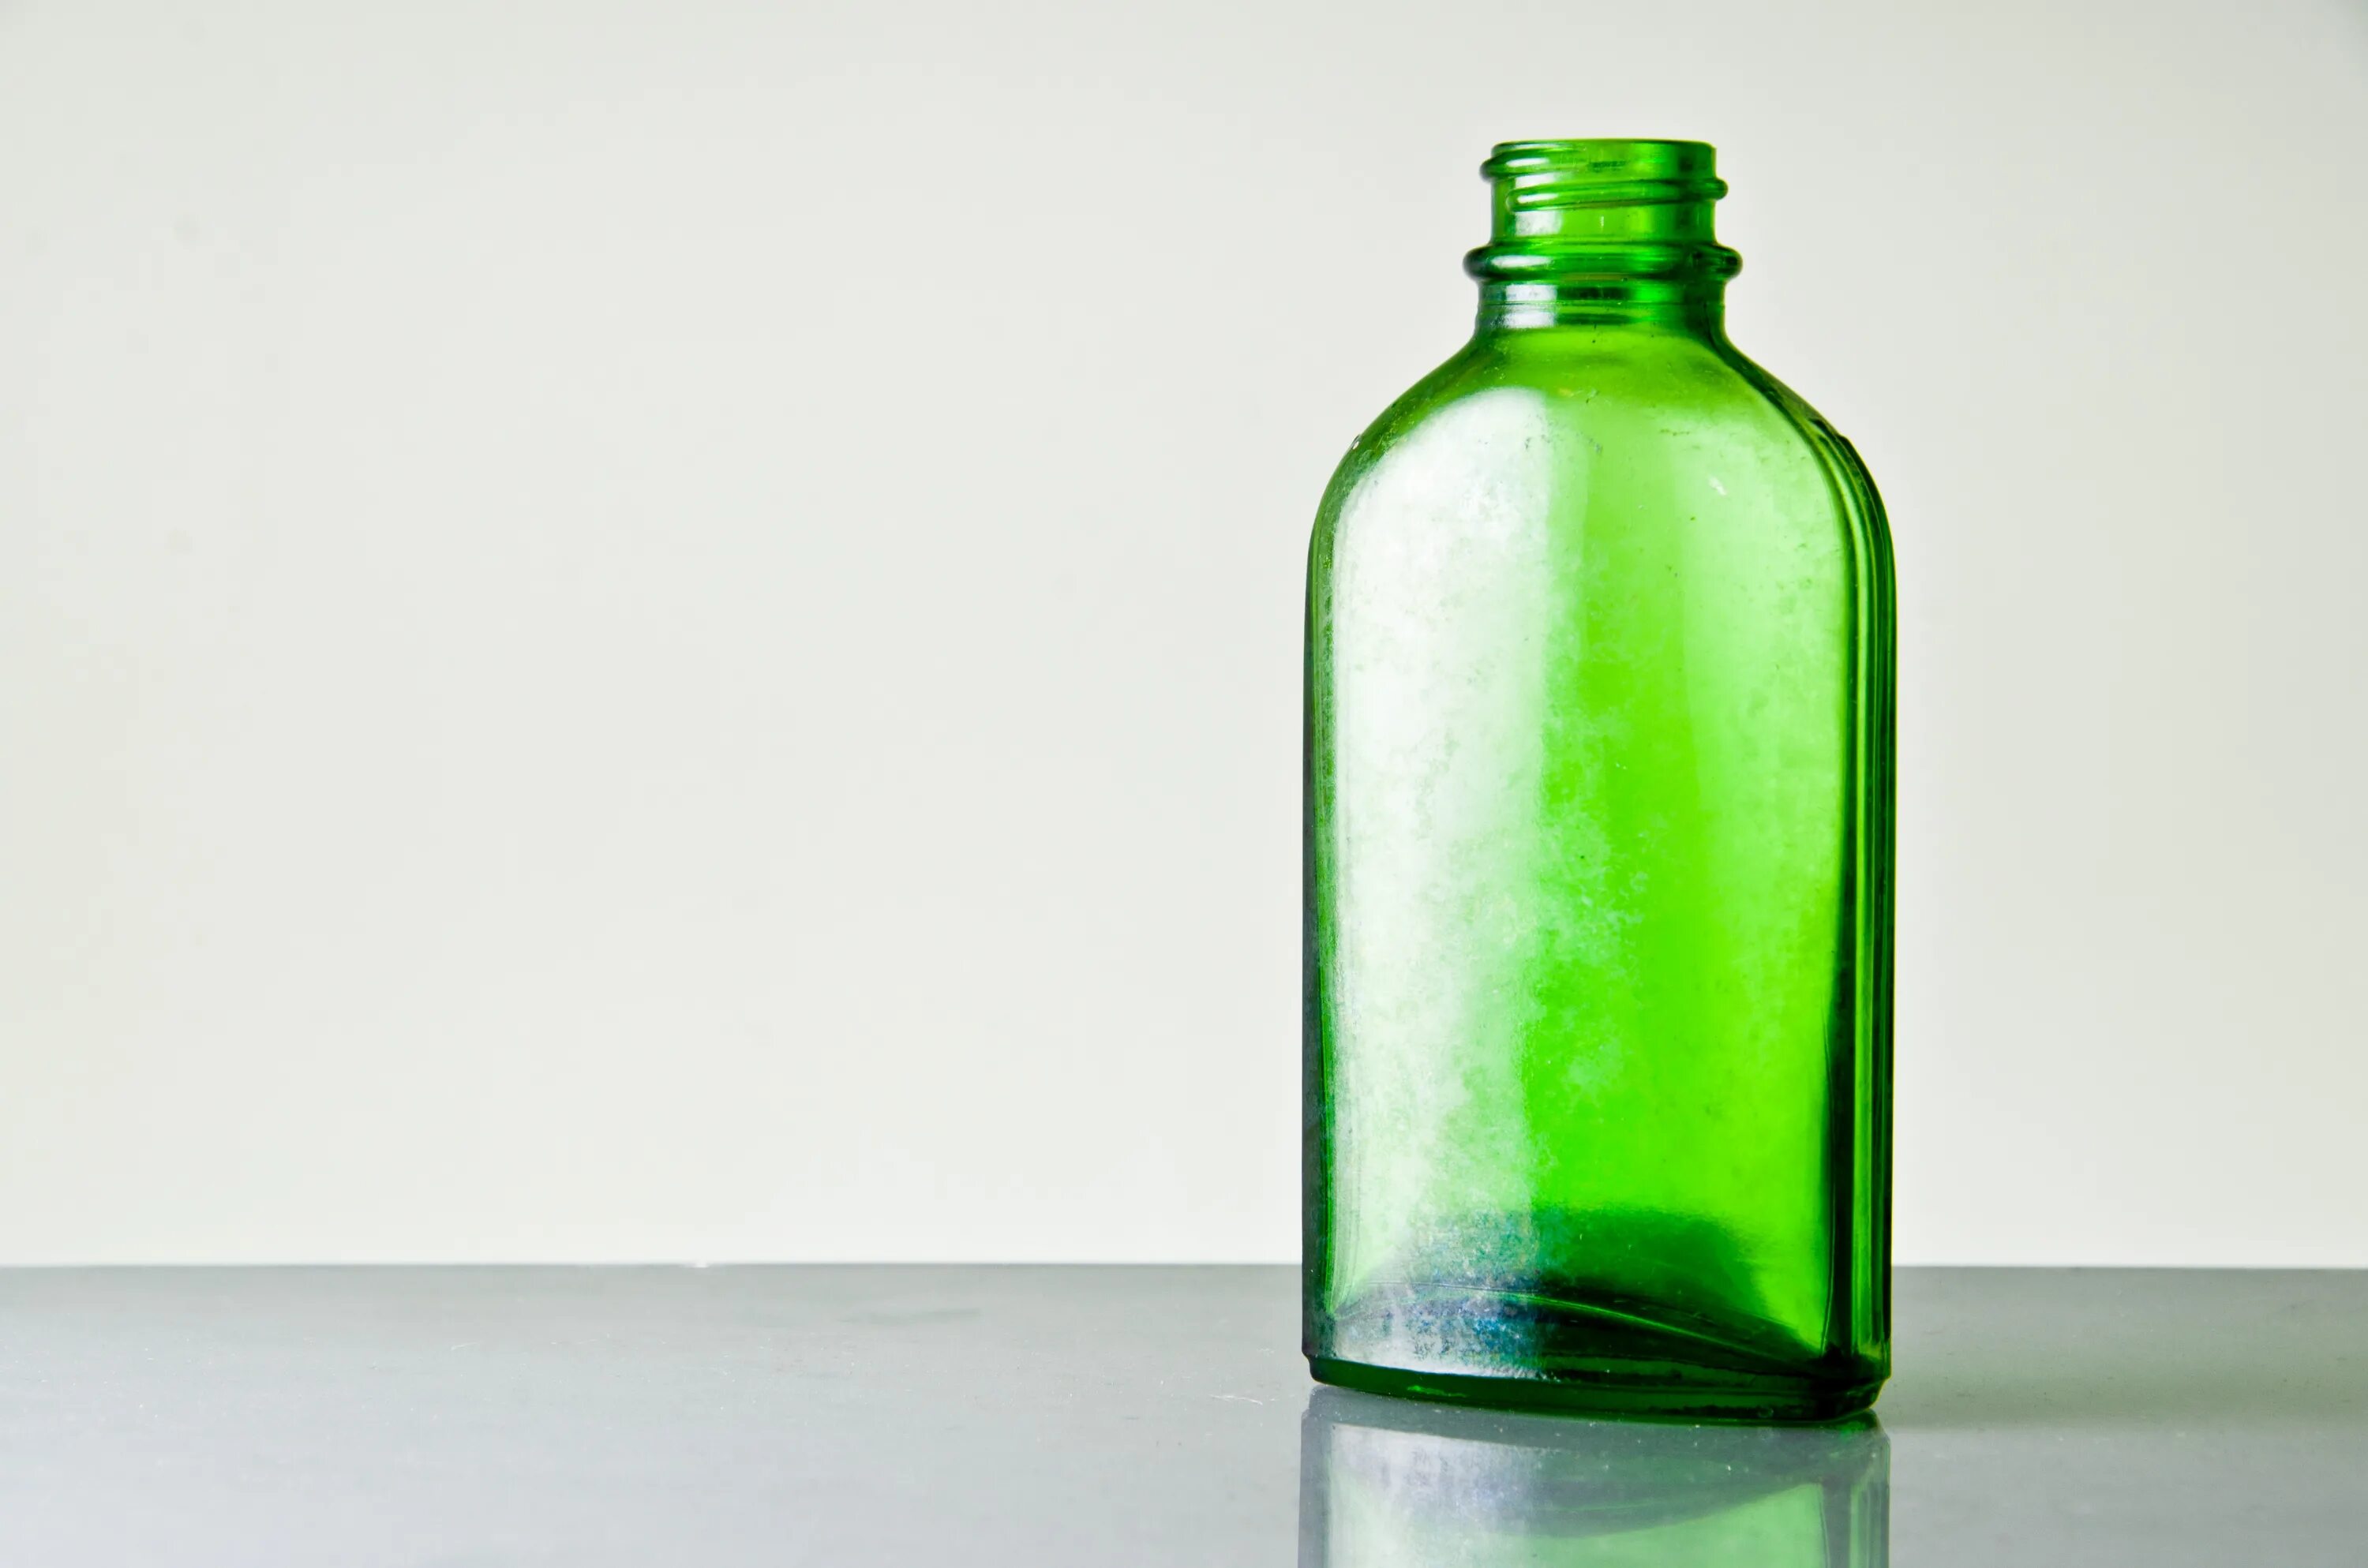 Стеклянная бутылка. Бутылка зеленая стеклянная. Бутылочное стекло. Пустая стеклянная бутылка. Вода в зеленой стеклянной бутылке